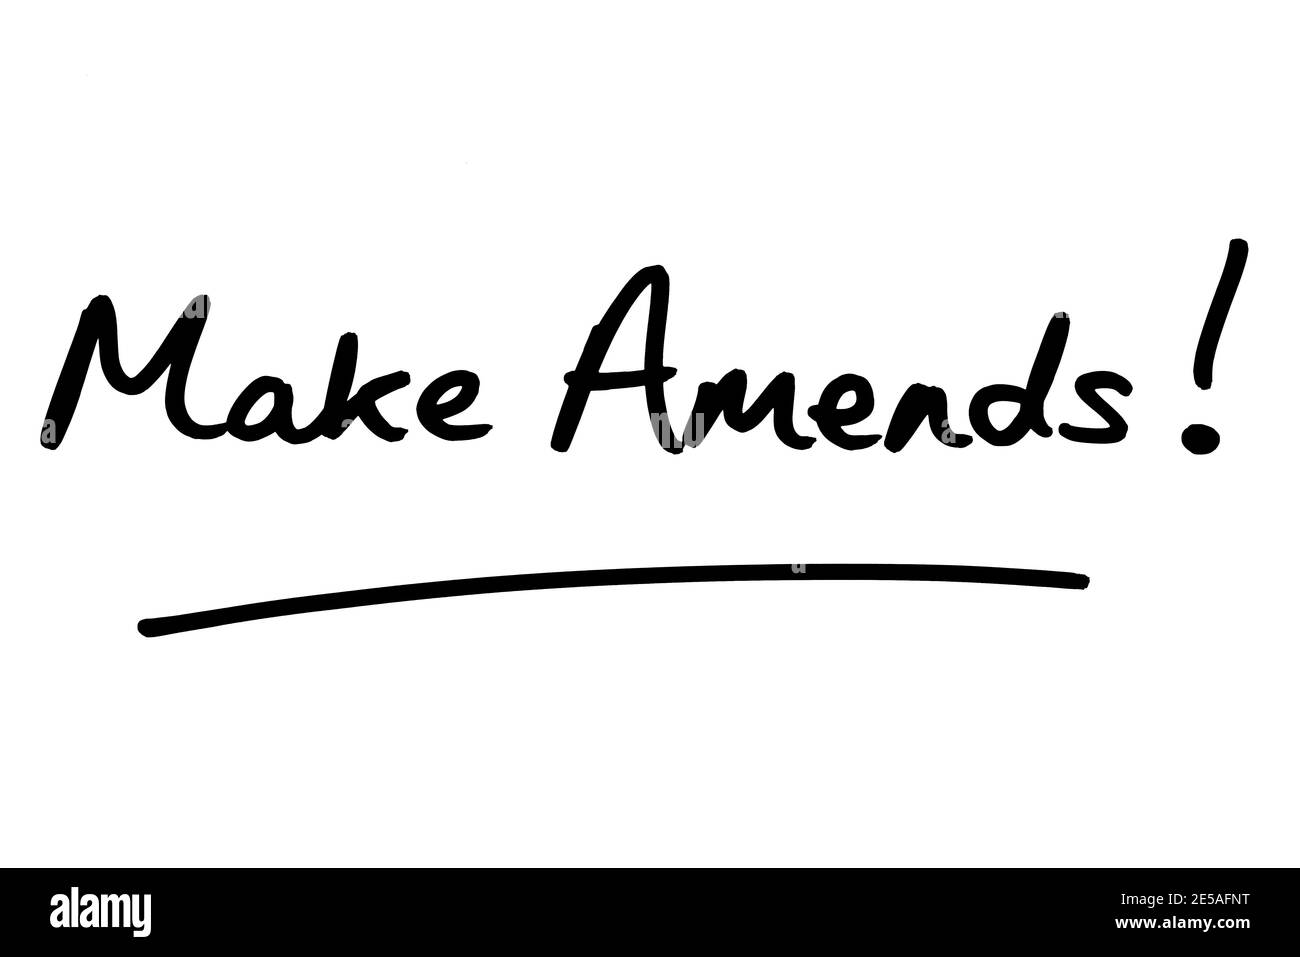 Make Amends! handwritten on a white background. Stock Photo